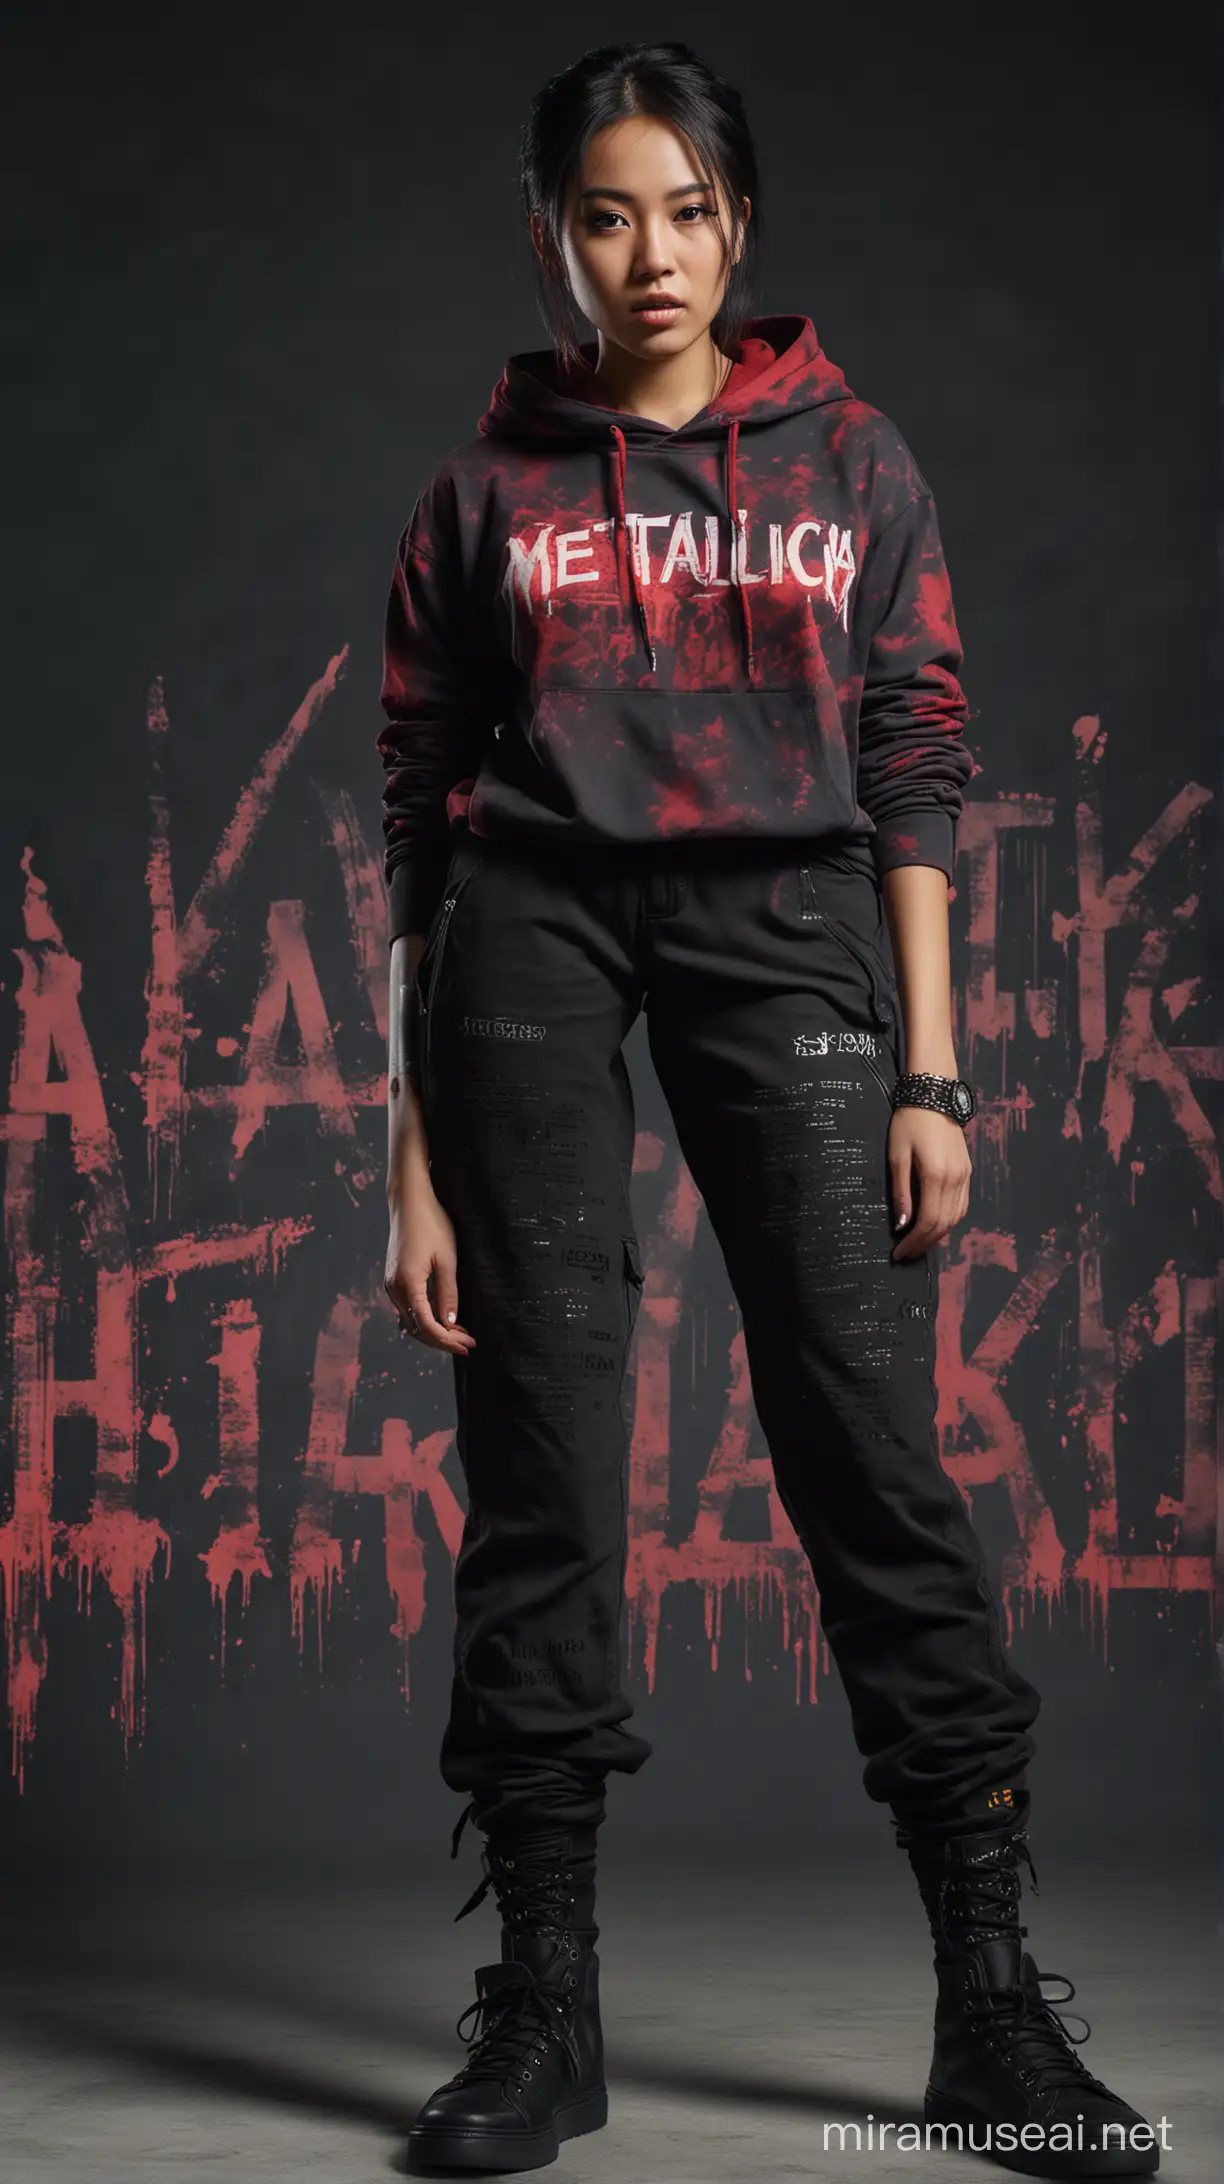 Complicated Metallica Lissajous Art with Beautiful Asian Girl in FRISKA Hoodie